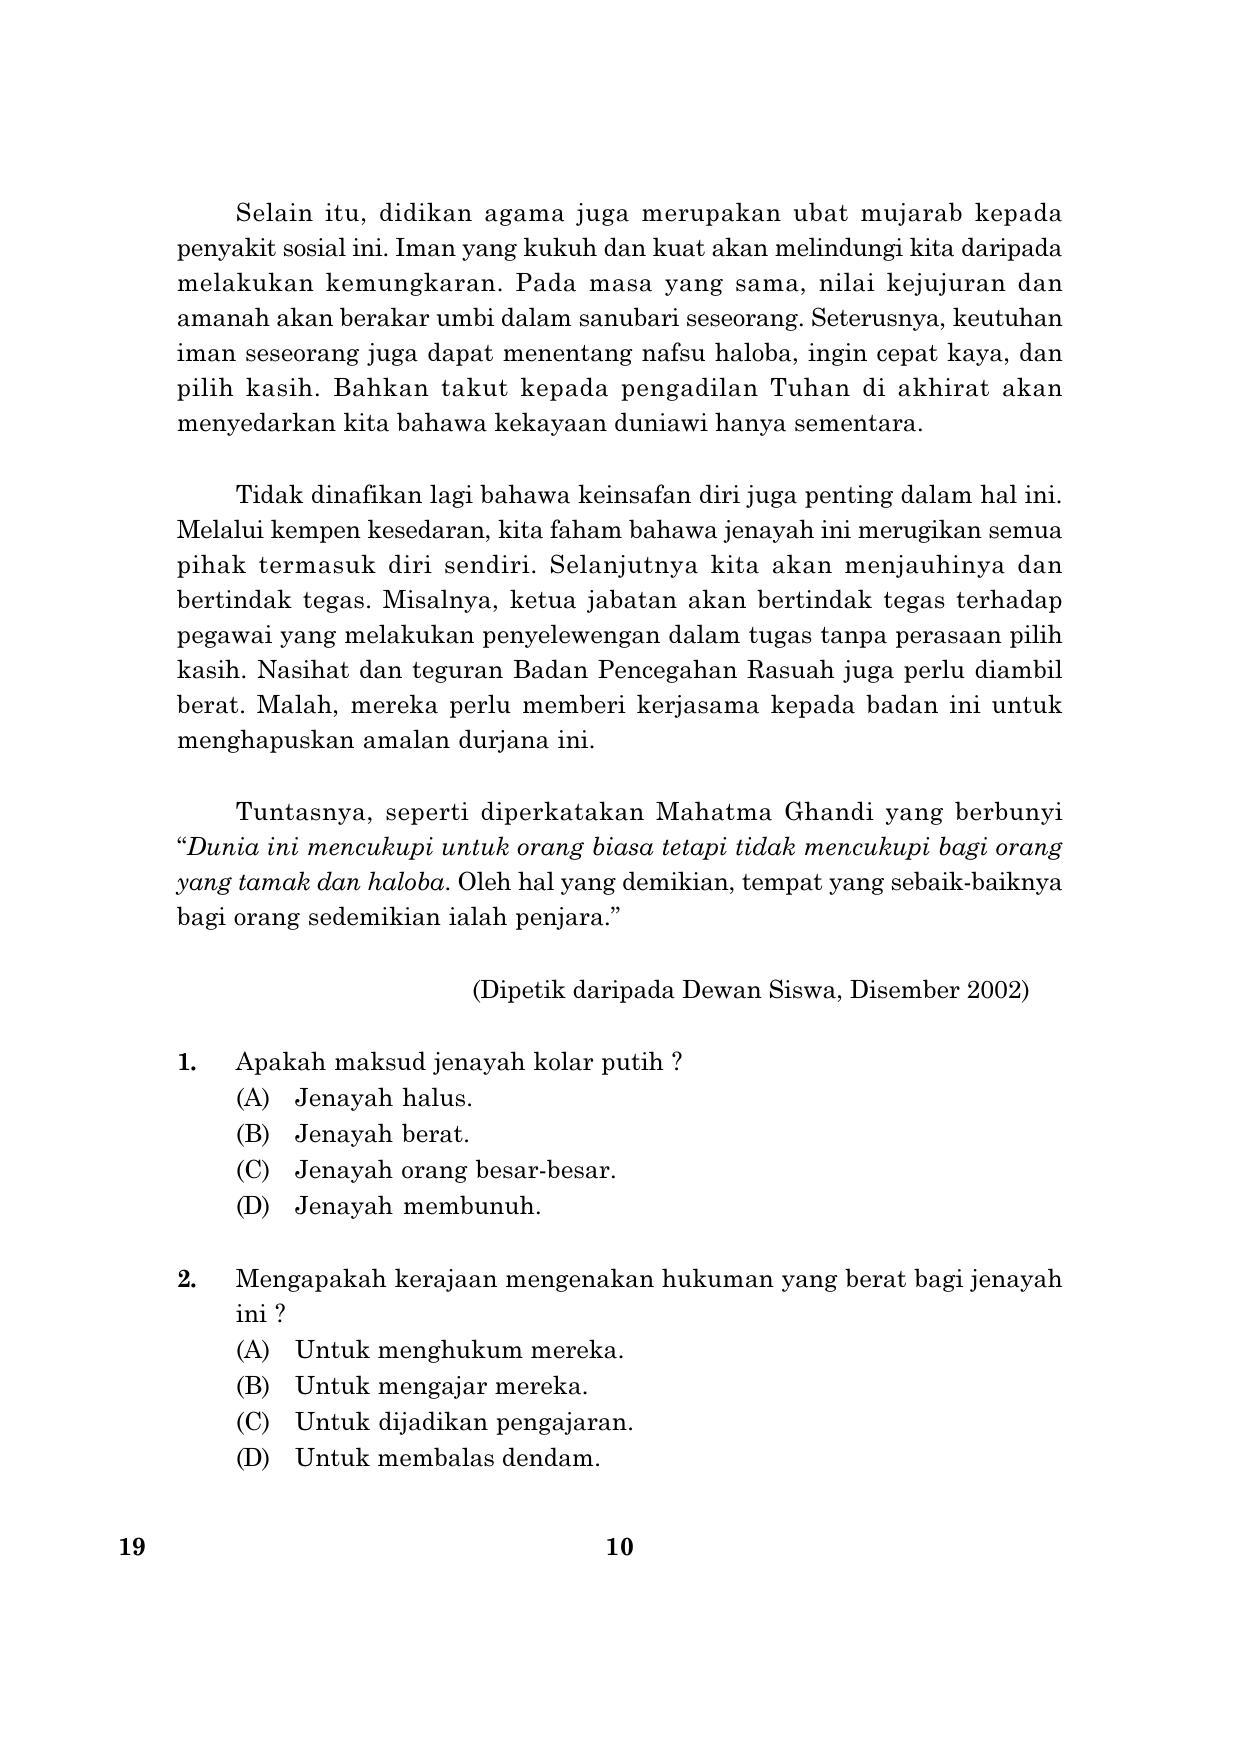 CBSE Class 10 019 Bahasamelayu English 2016 Question Paper - Page 10